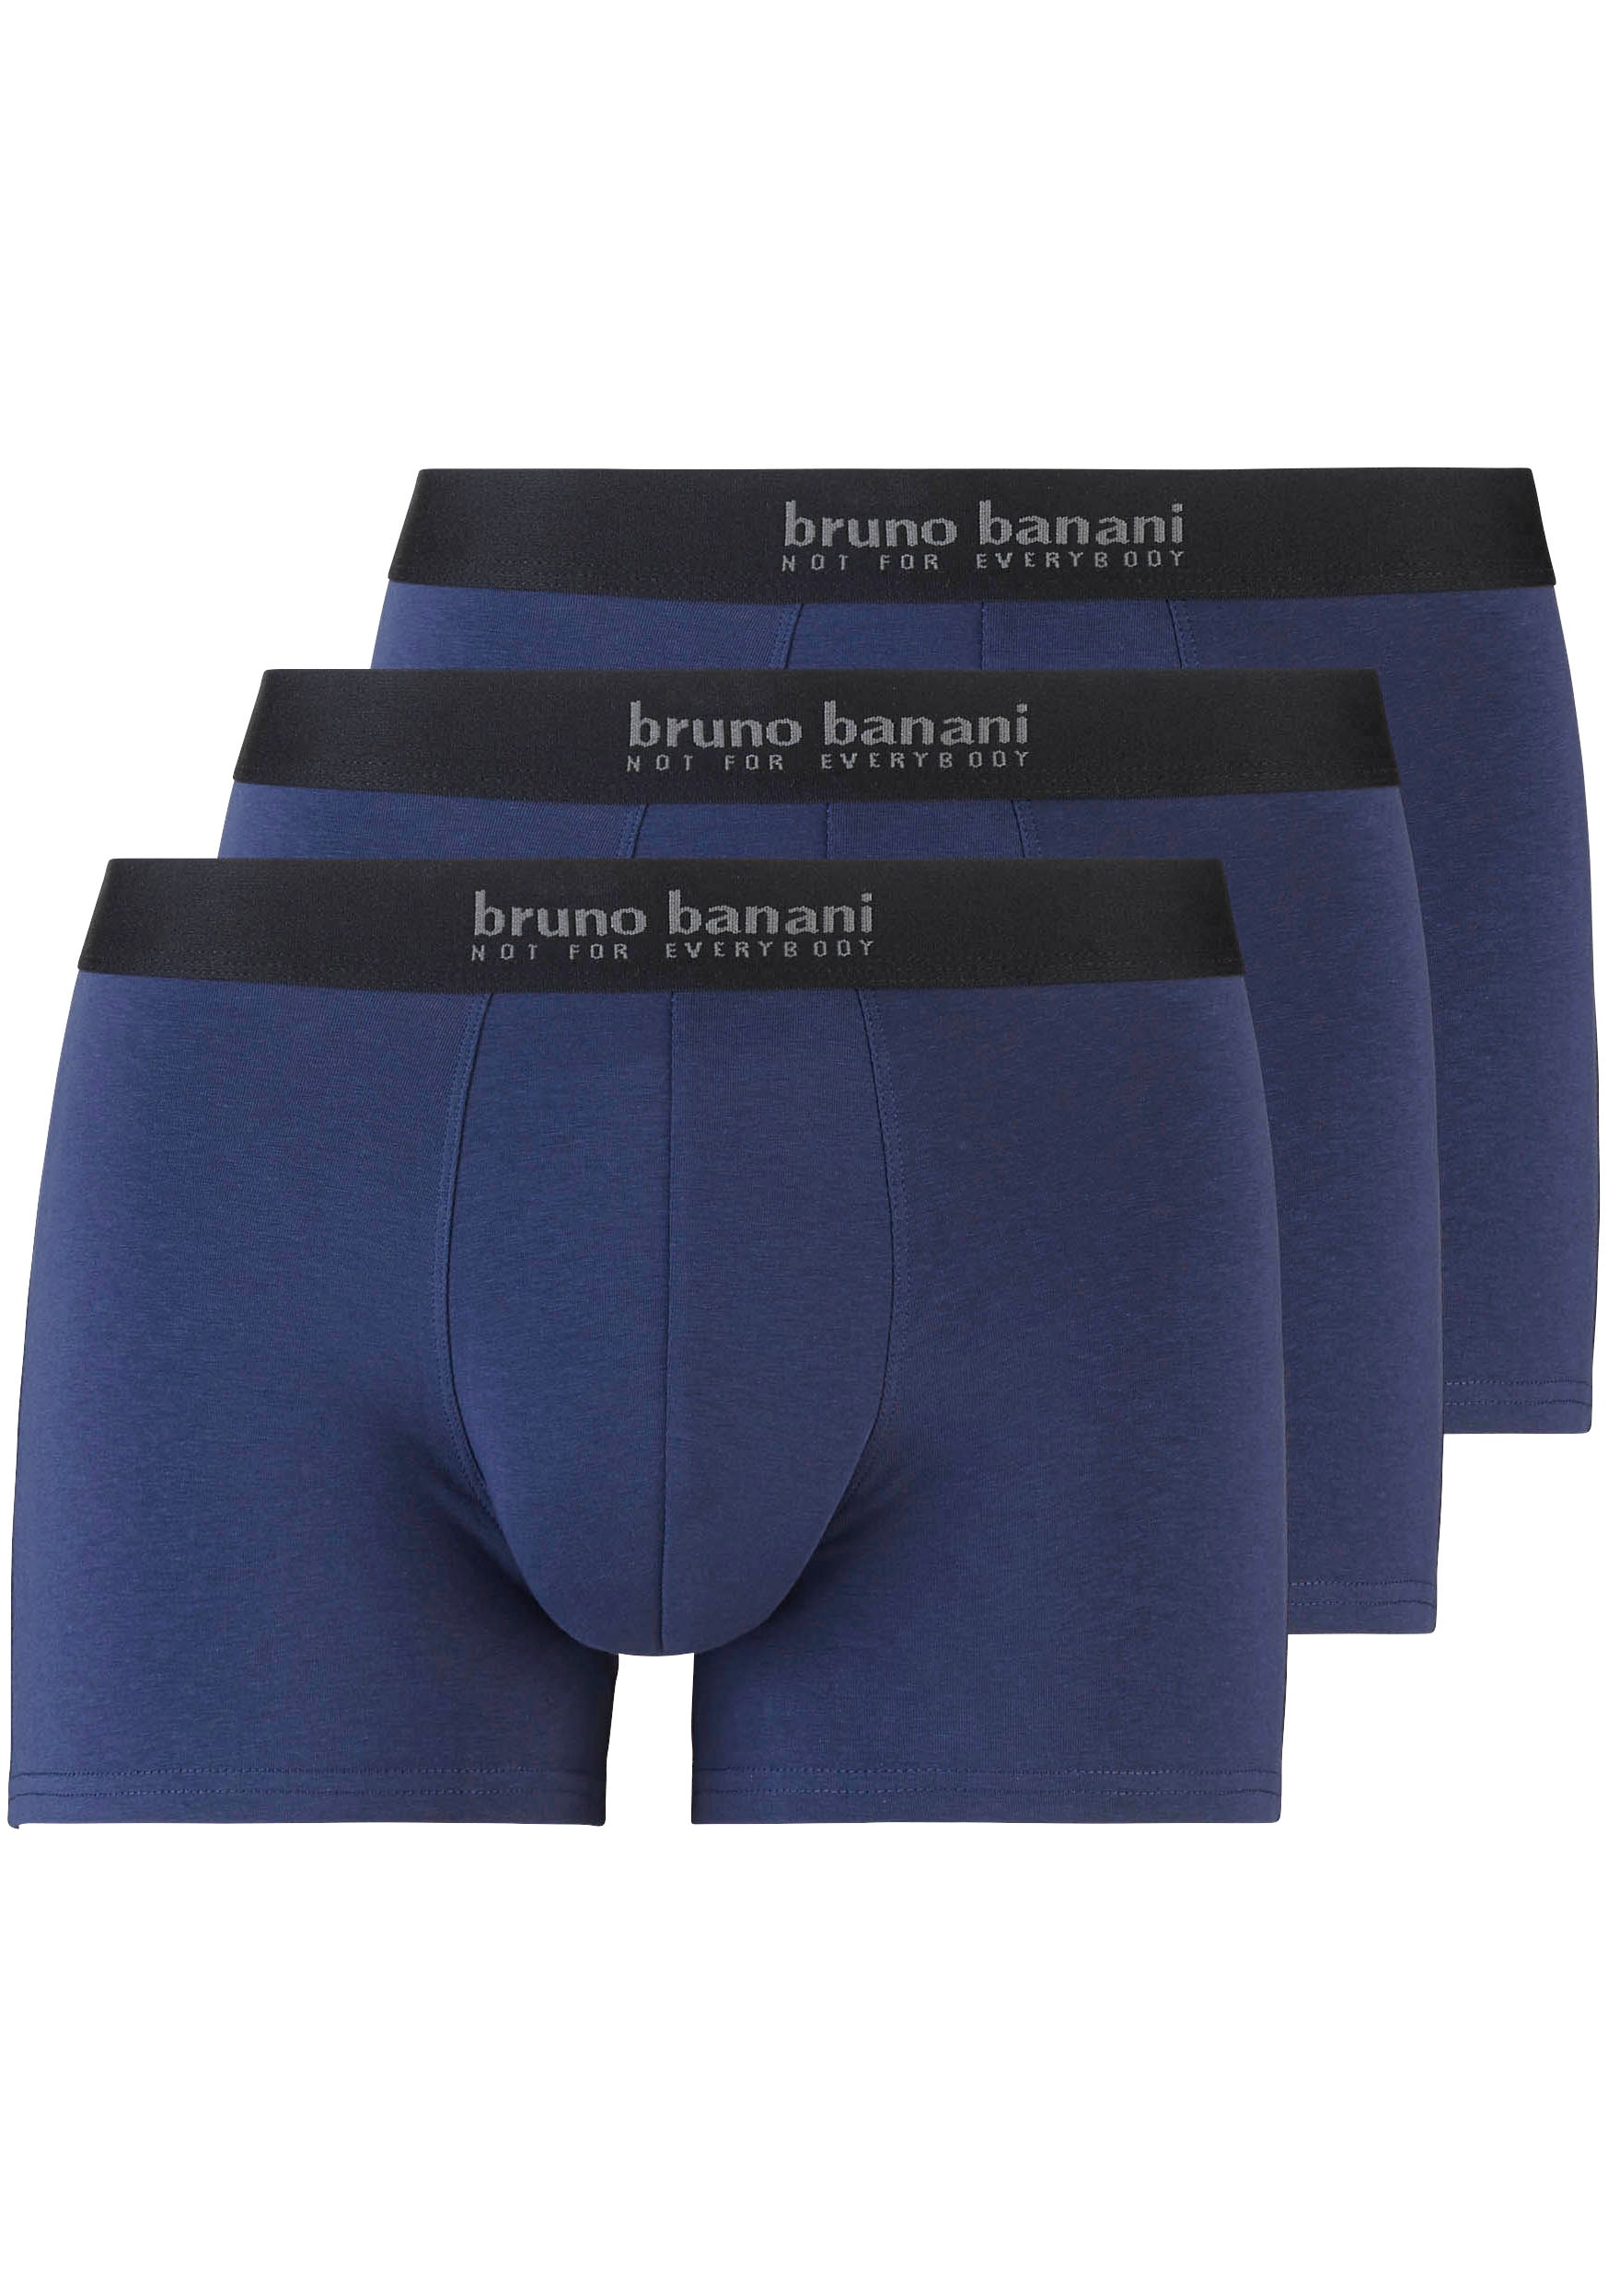 bruno banani Herren Short 3er Pack Energy Cotton Boxershorts, Blau (Navy 1302), Small (Herstellergröße: S) (3erPack)